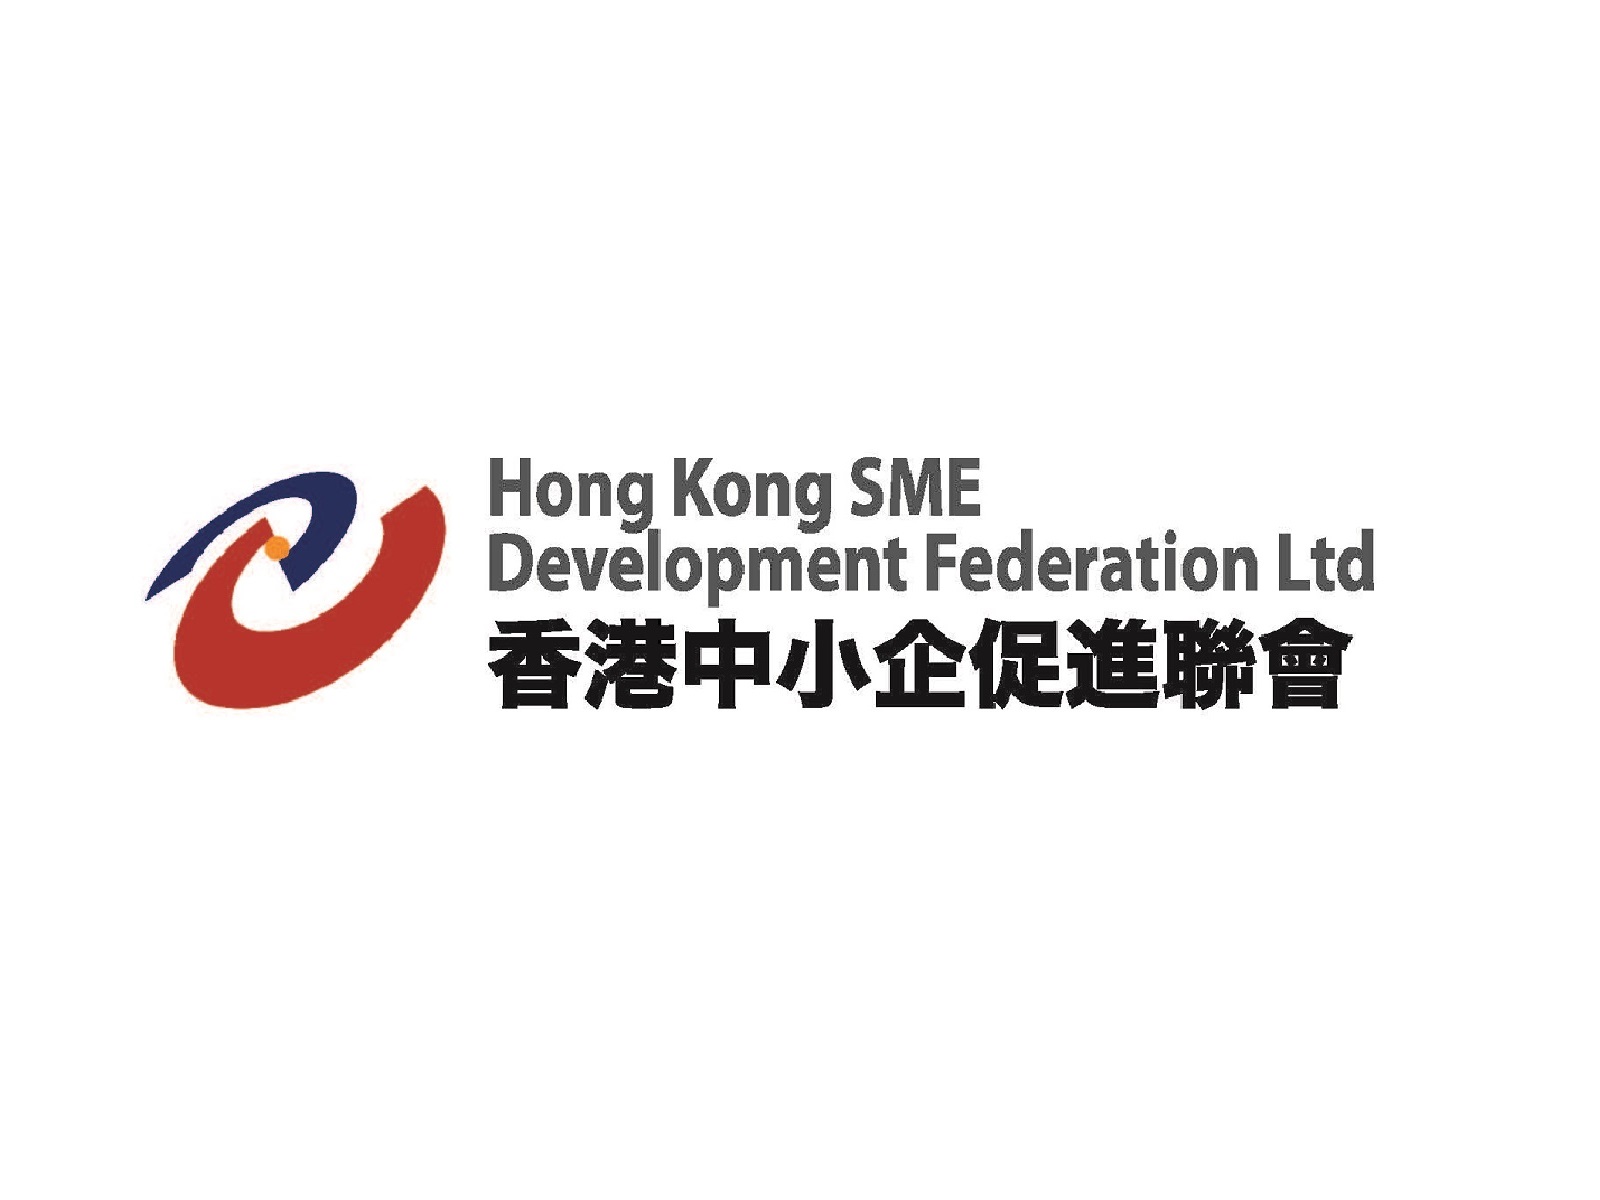 Hong Kong SME Development Federation Ltd